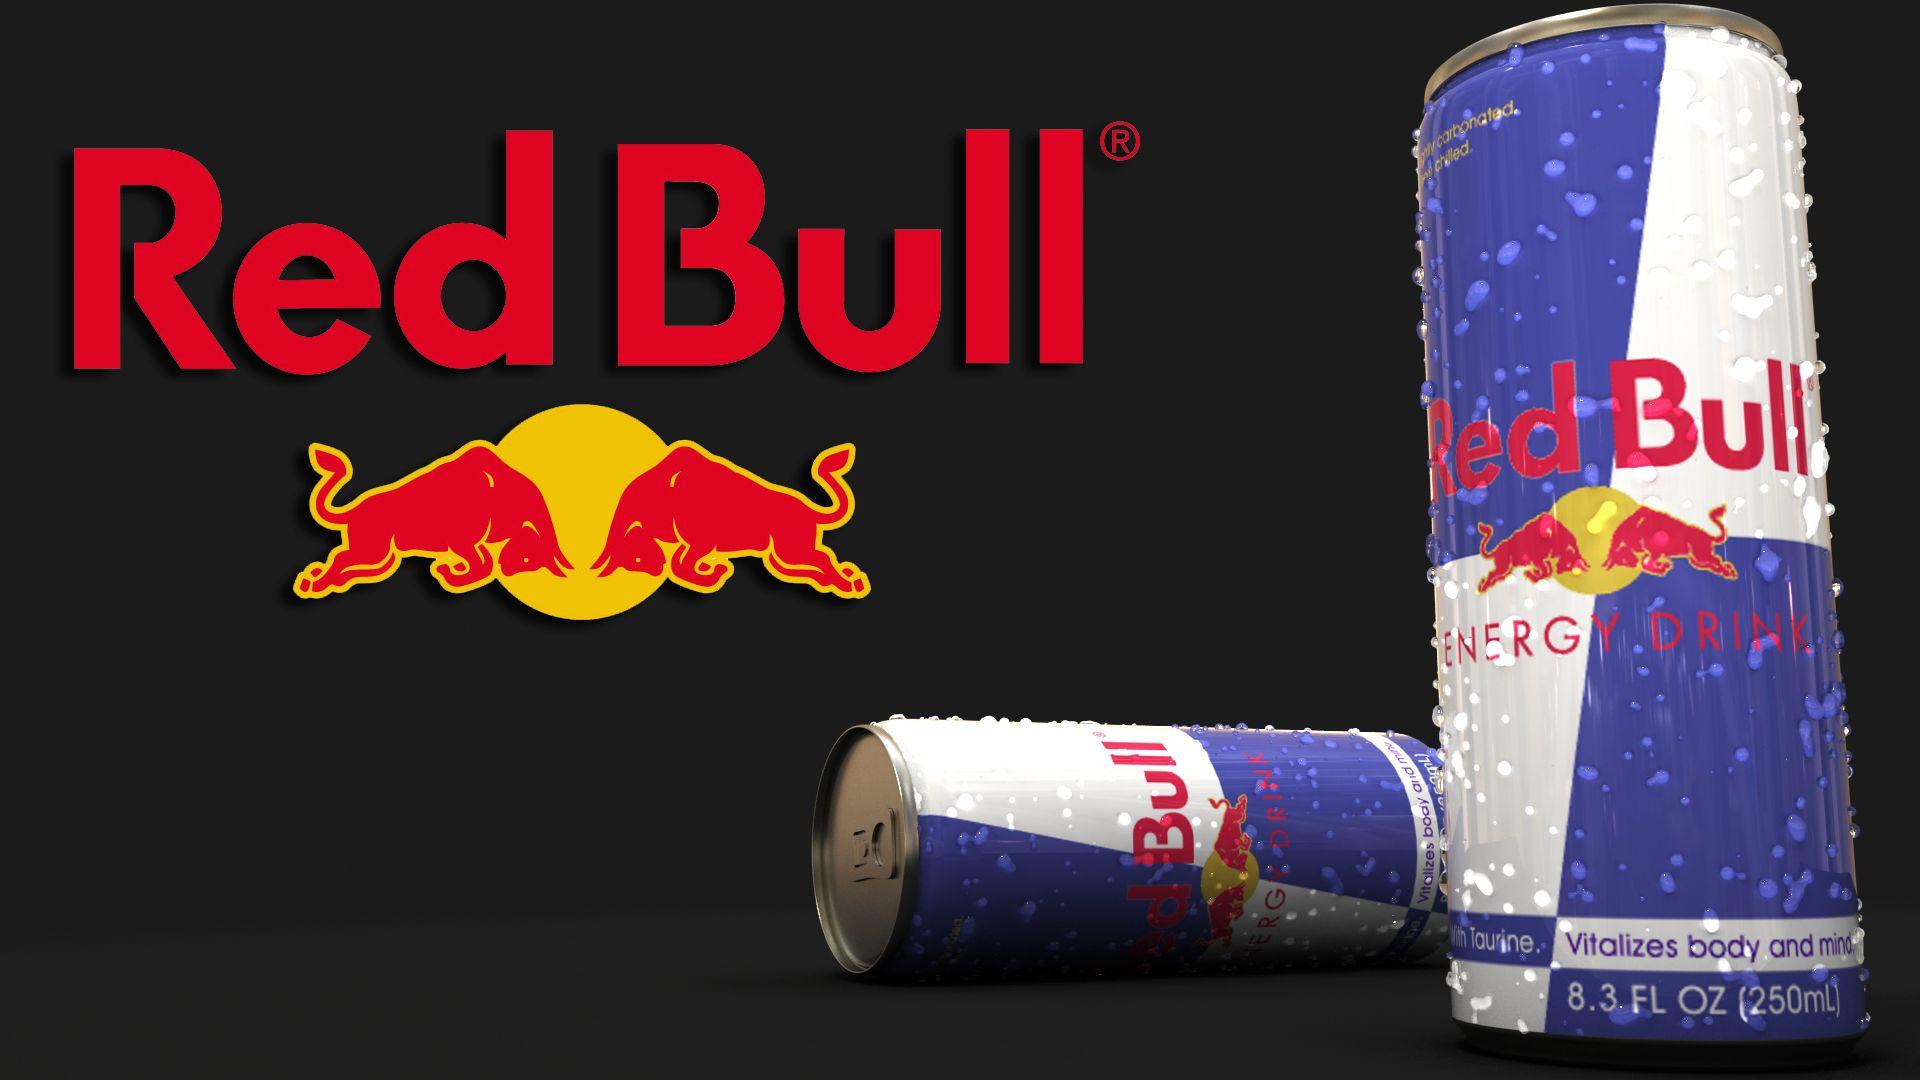 Red Bull Desktop Wallpaper